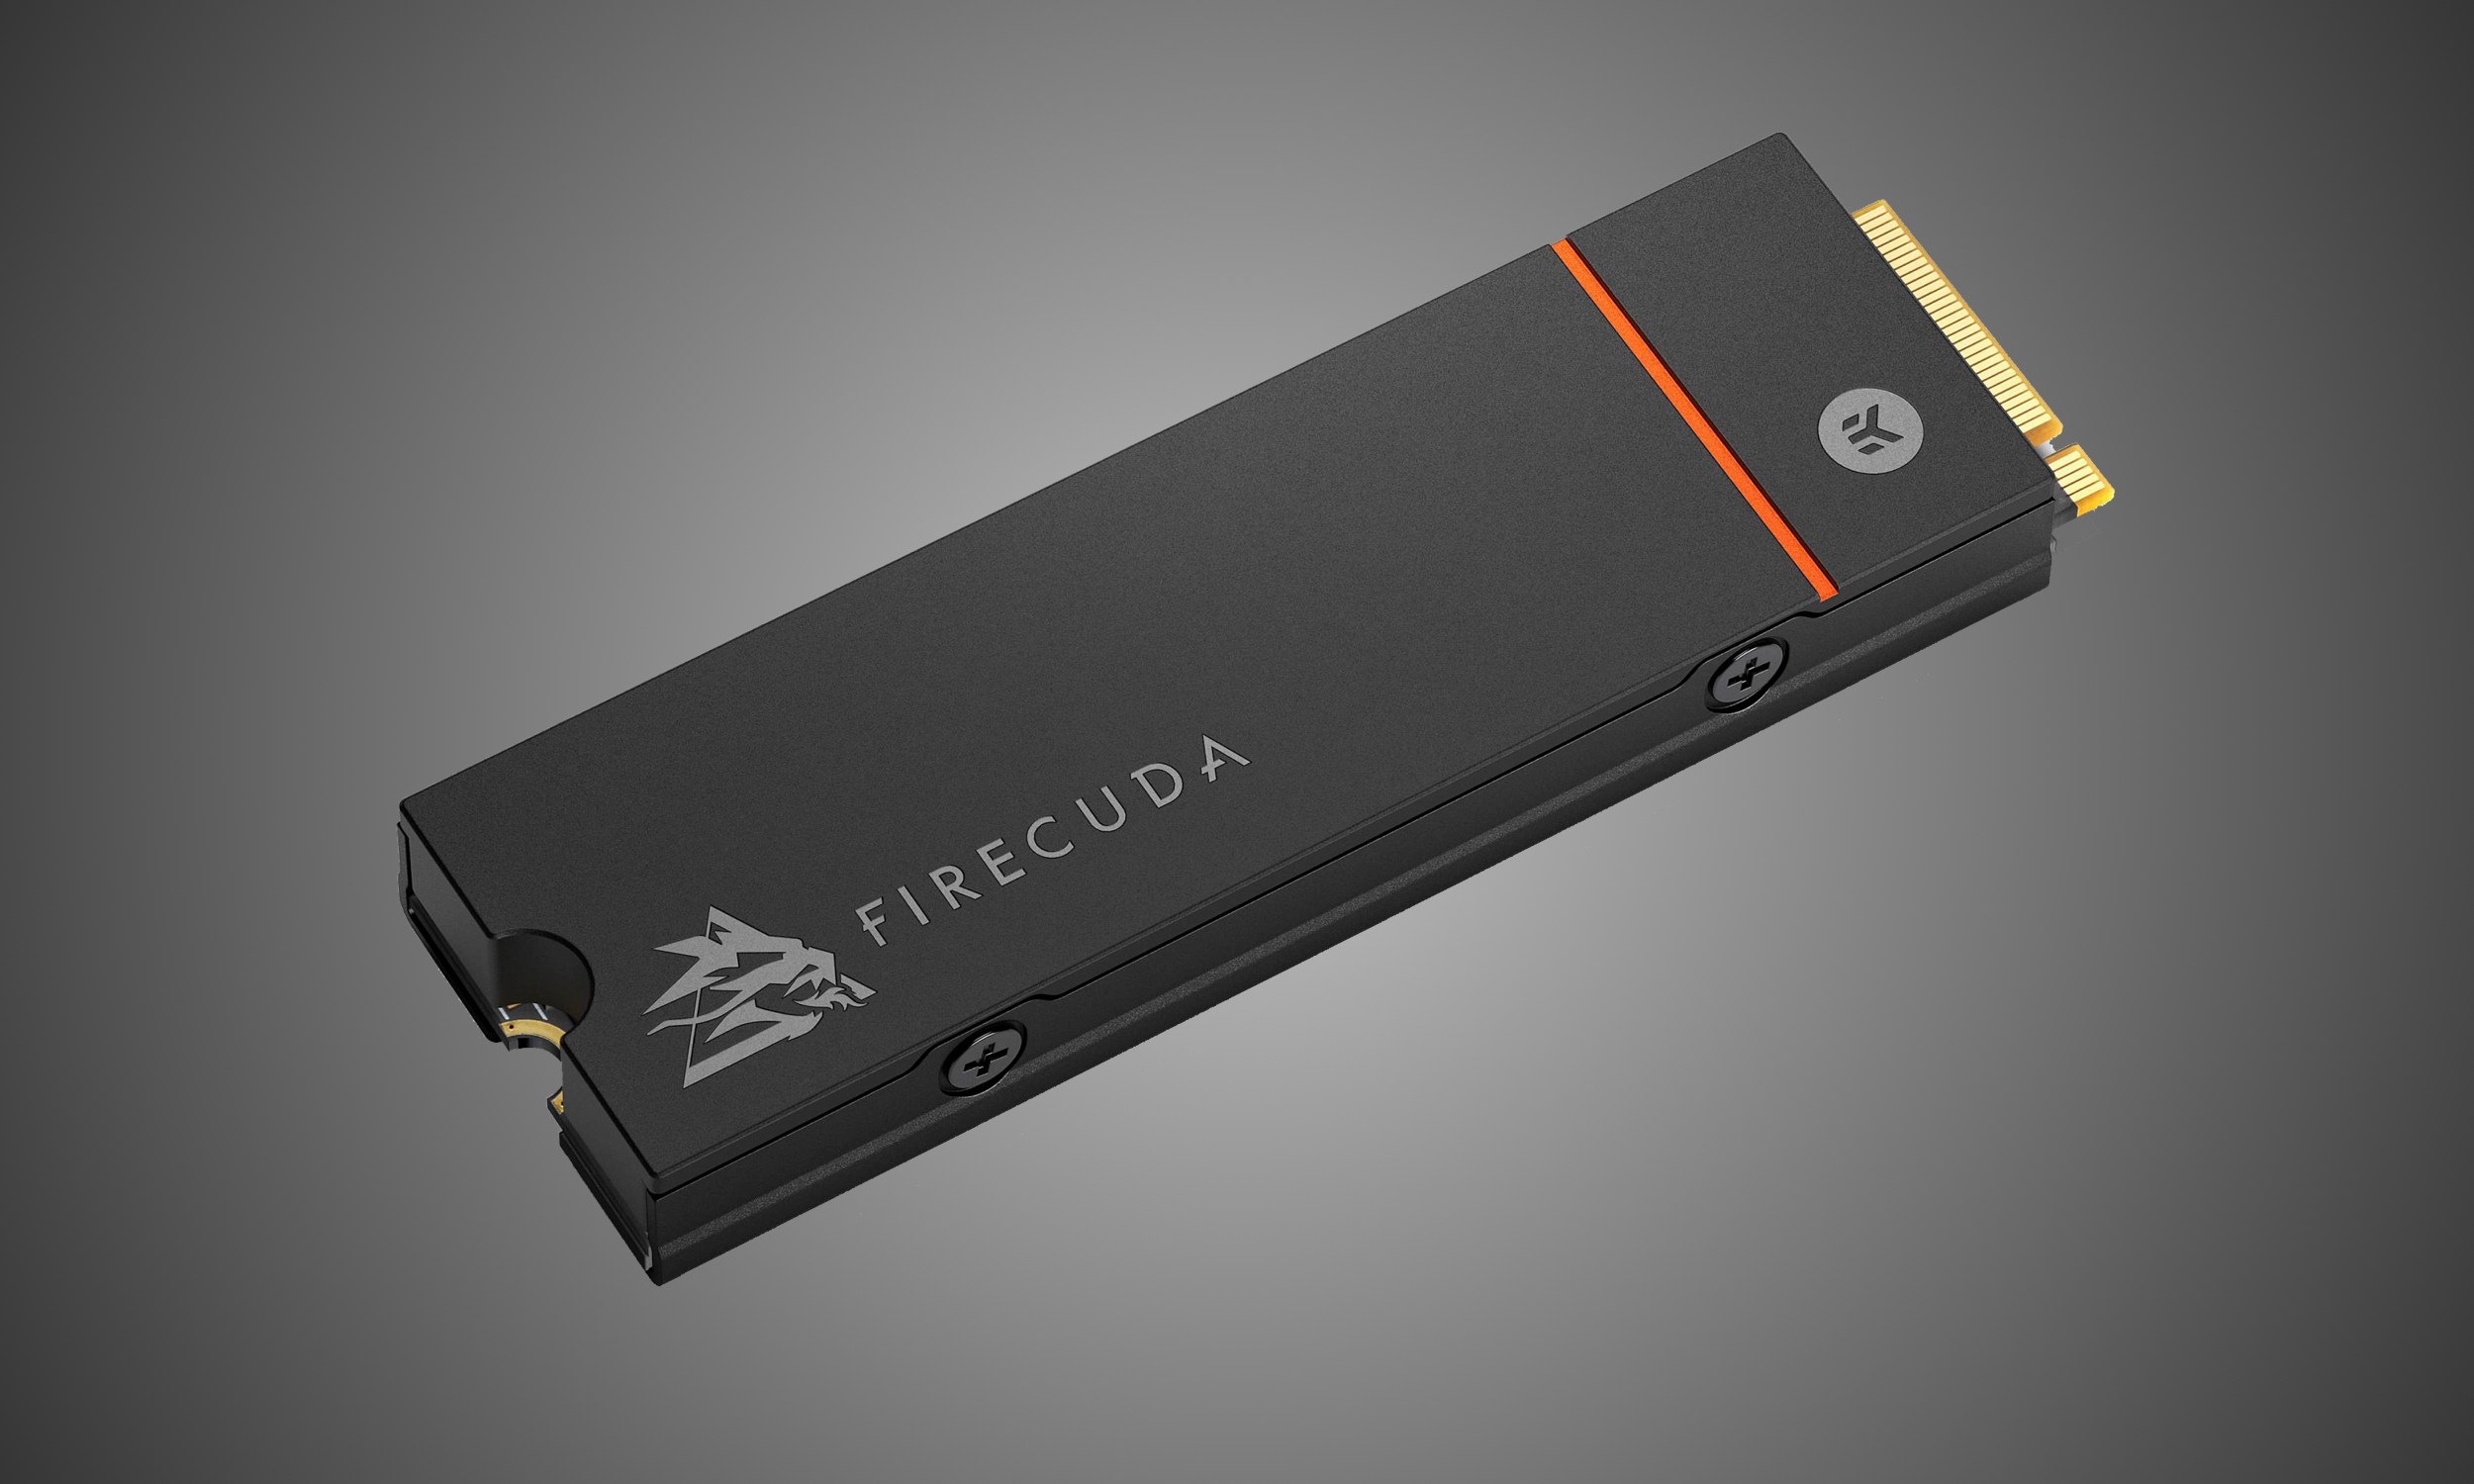 FireCuda 530 SSD 